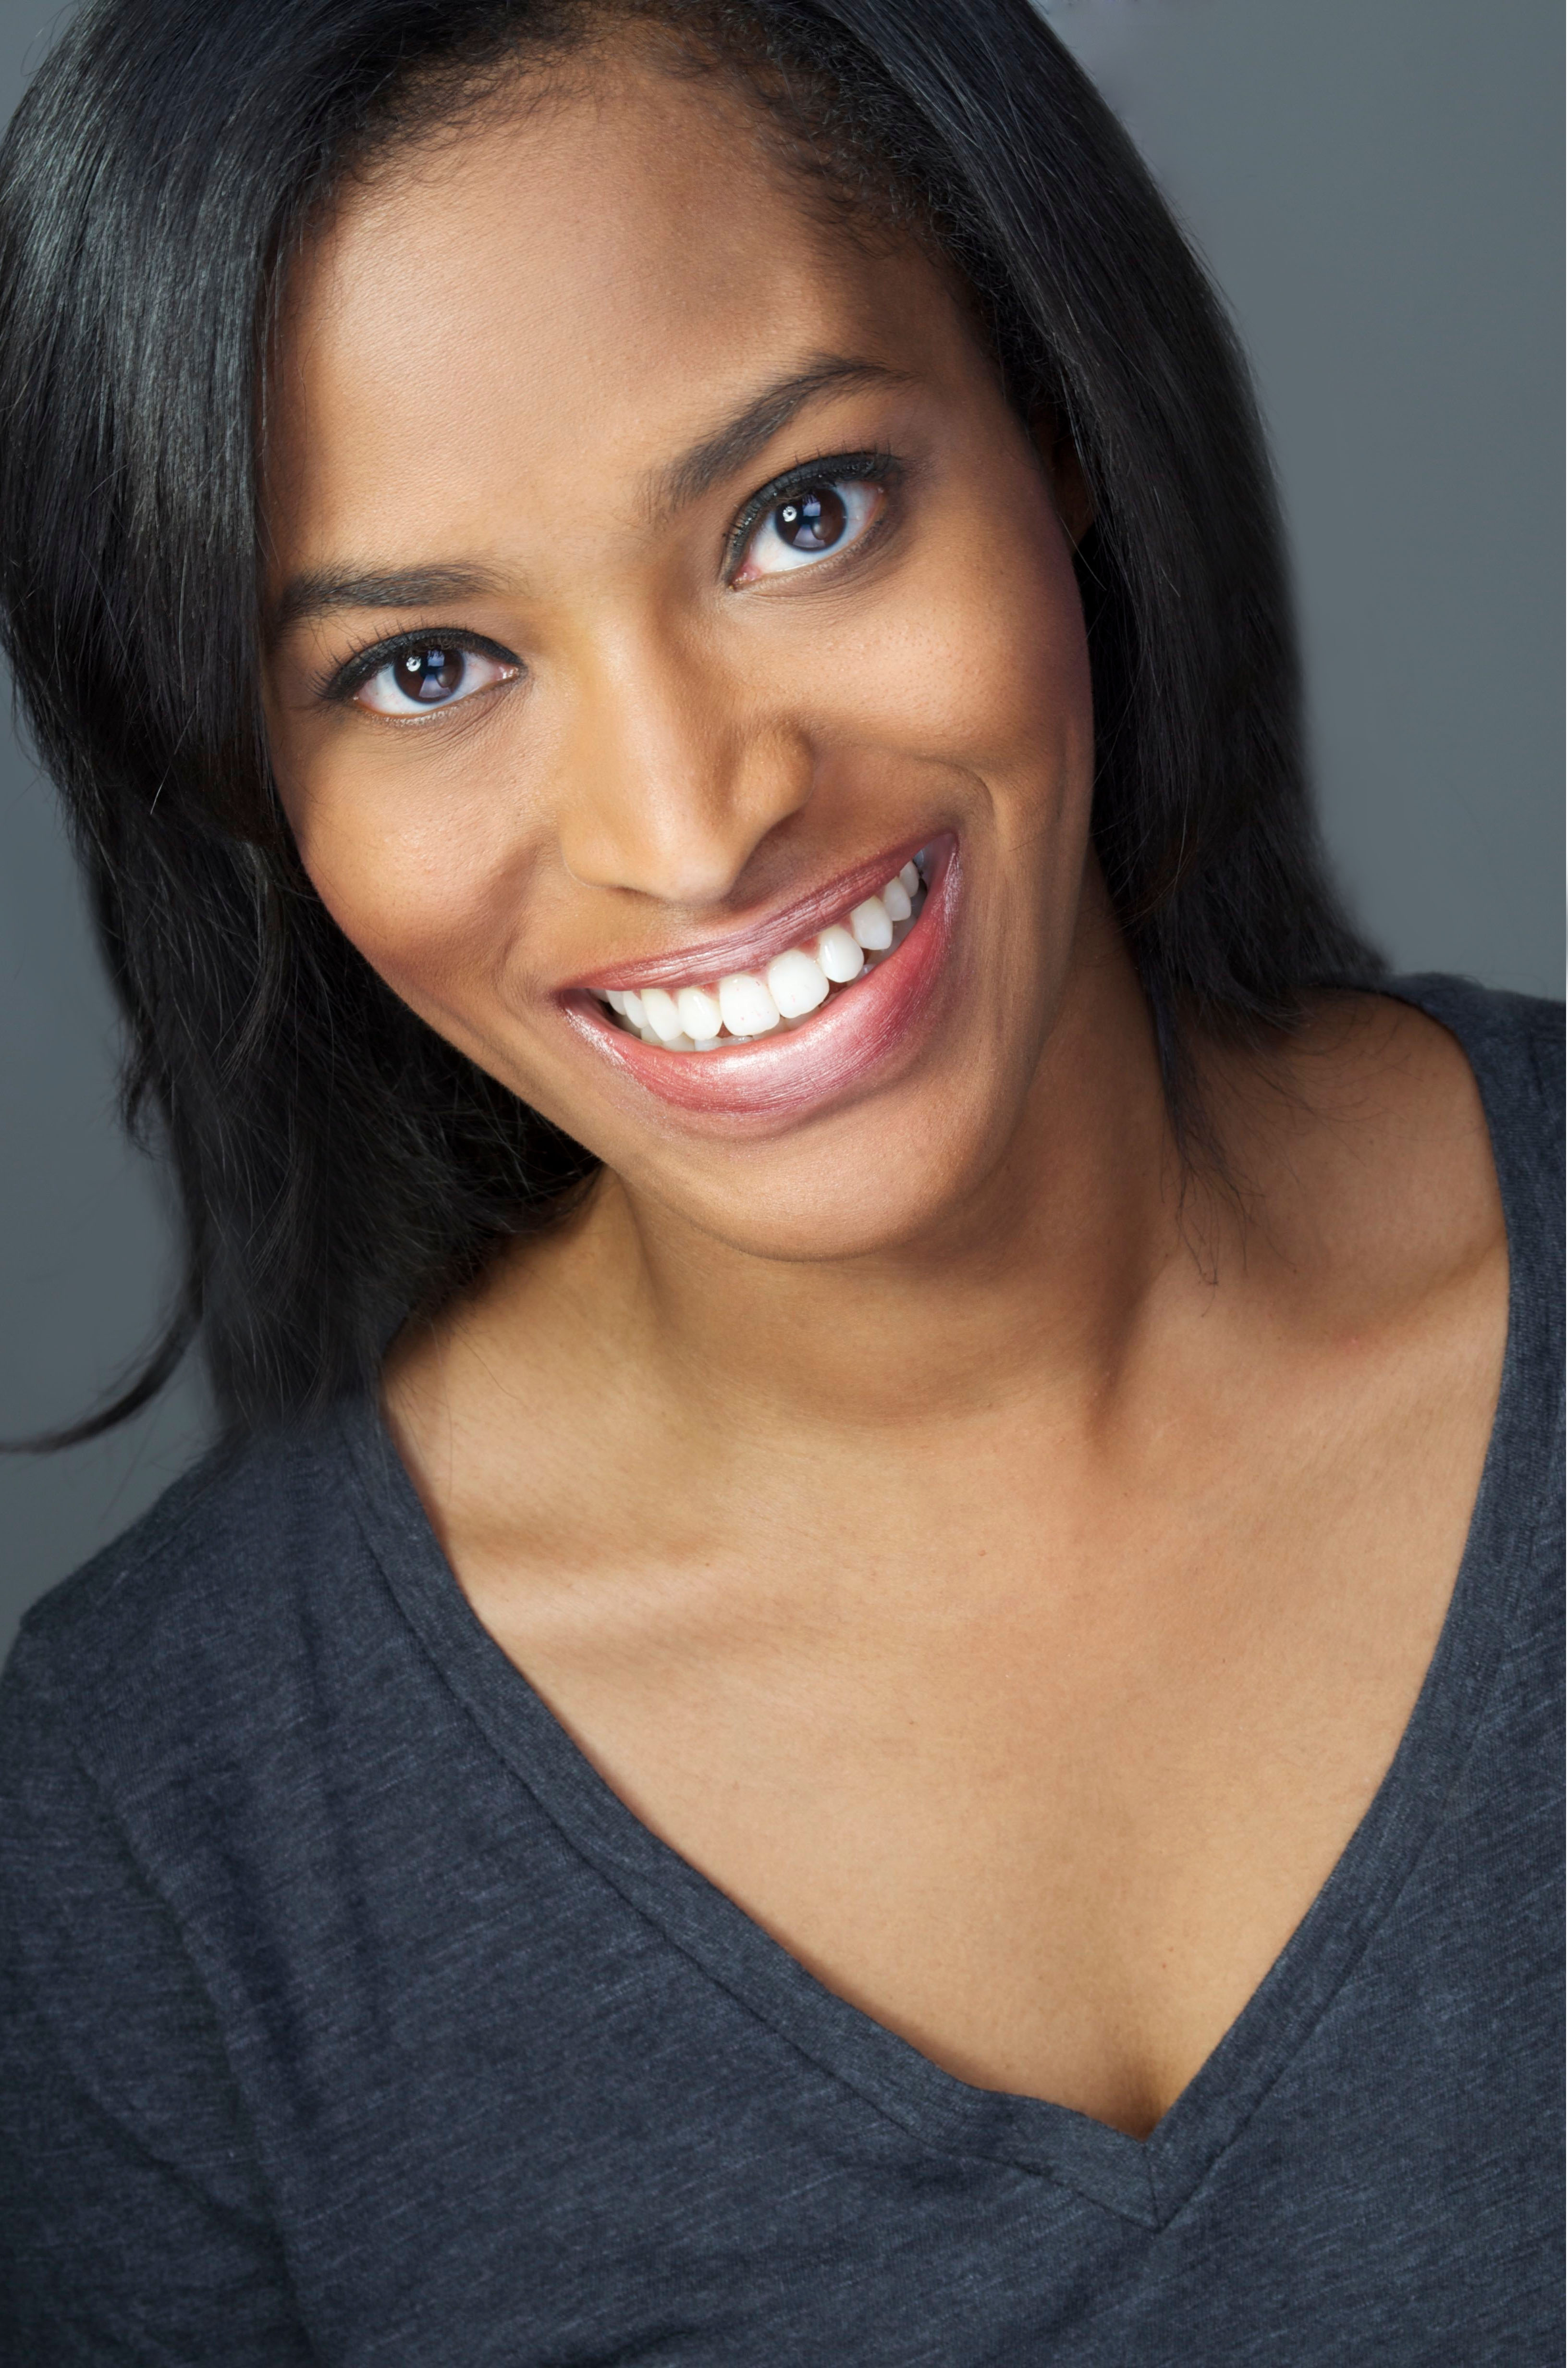 Dr. Misee Harris Pediatric Dentist Model/Actress